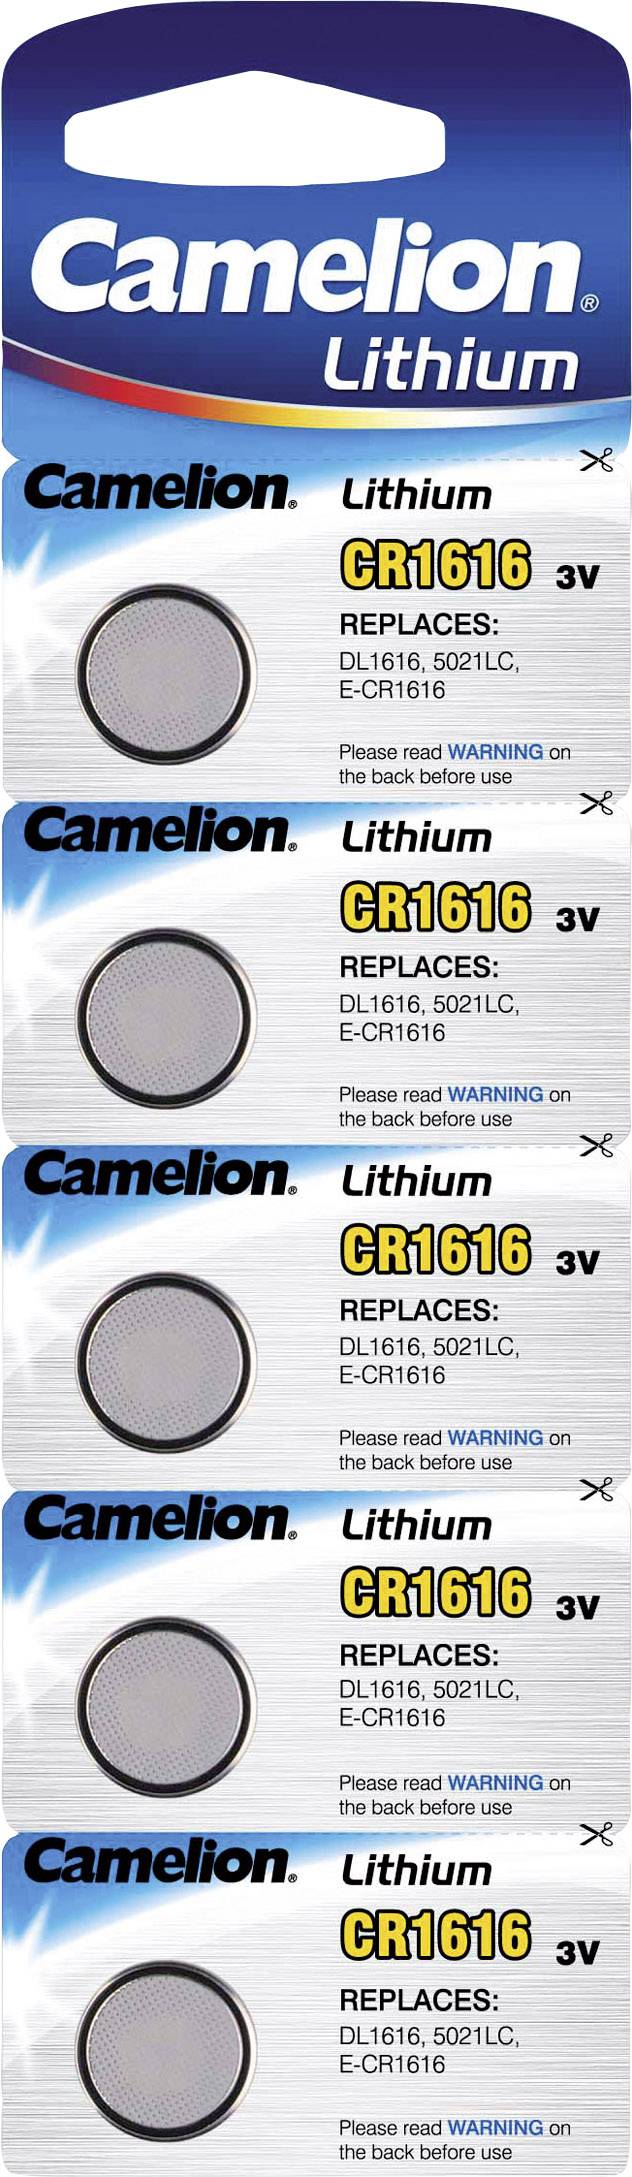 CAMELION CR1616-BP5 - Lithium - Knopf/Münze - CR1616 - Edelstahl - Sichtverpackung (13005161)